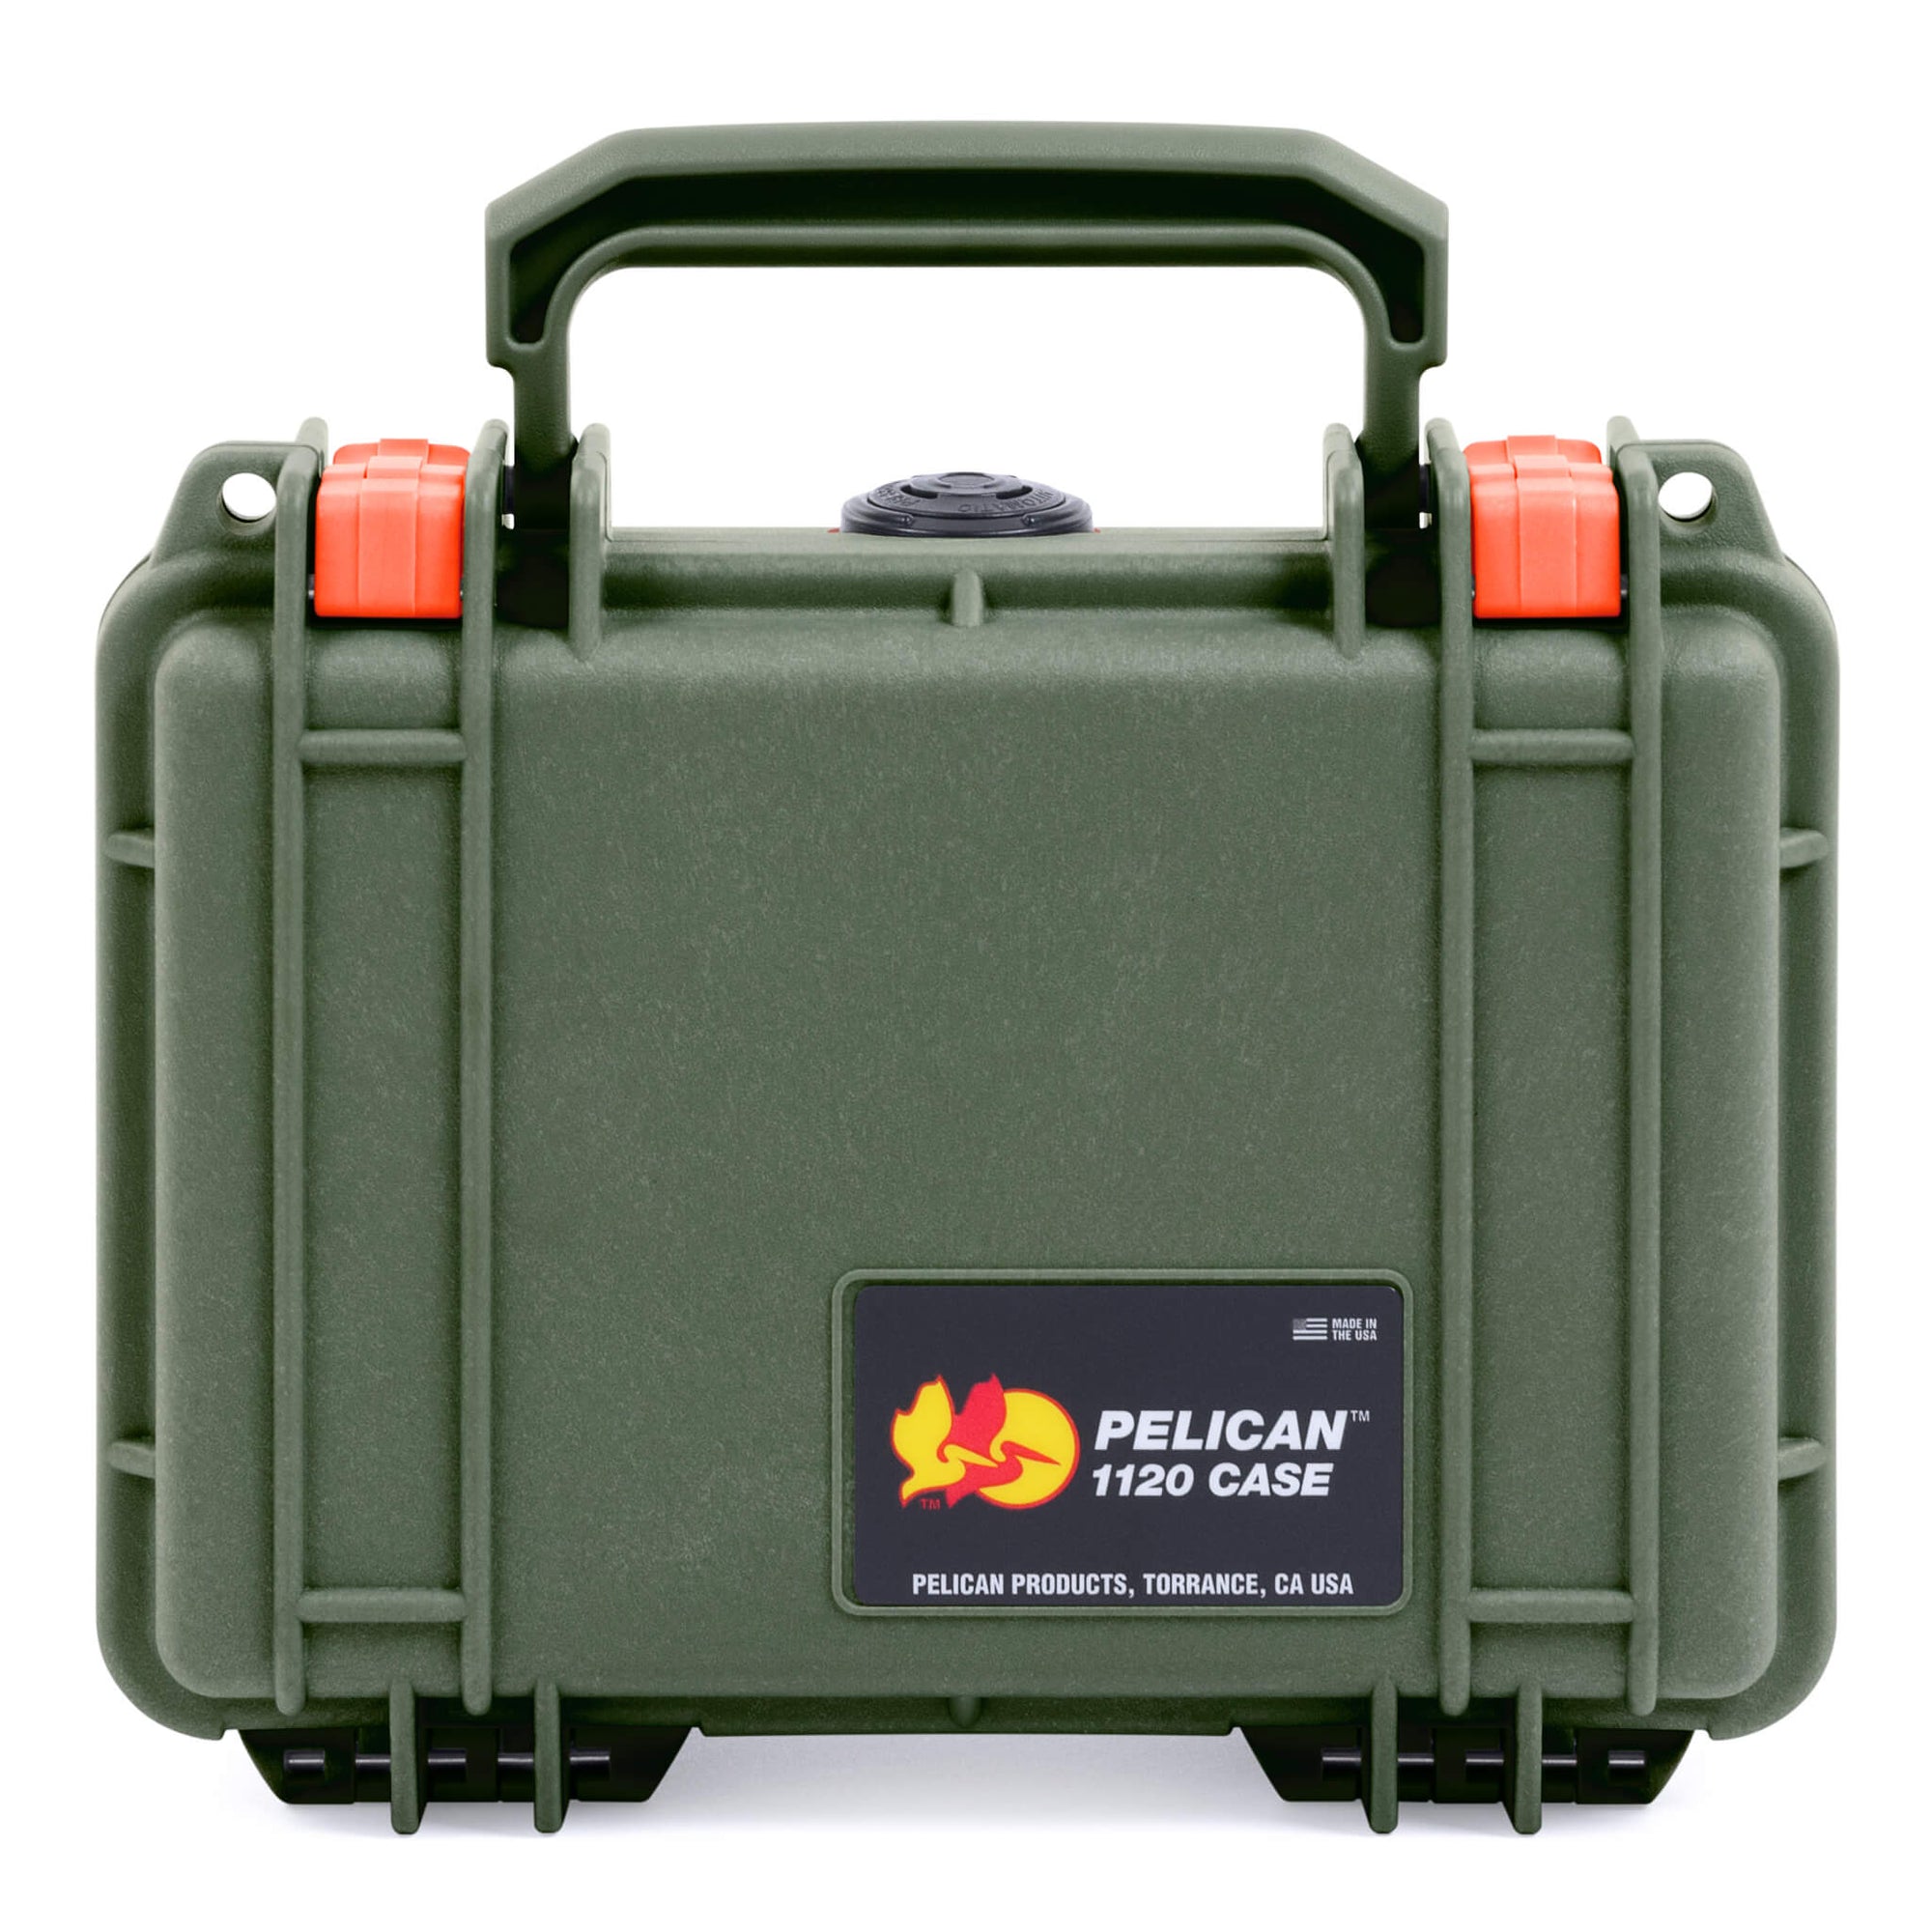 Pelican 1120 Case, OD Green with Orange Latches ColorCase 